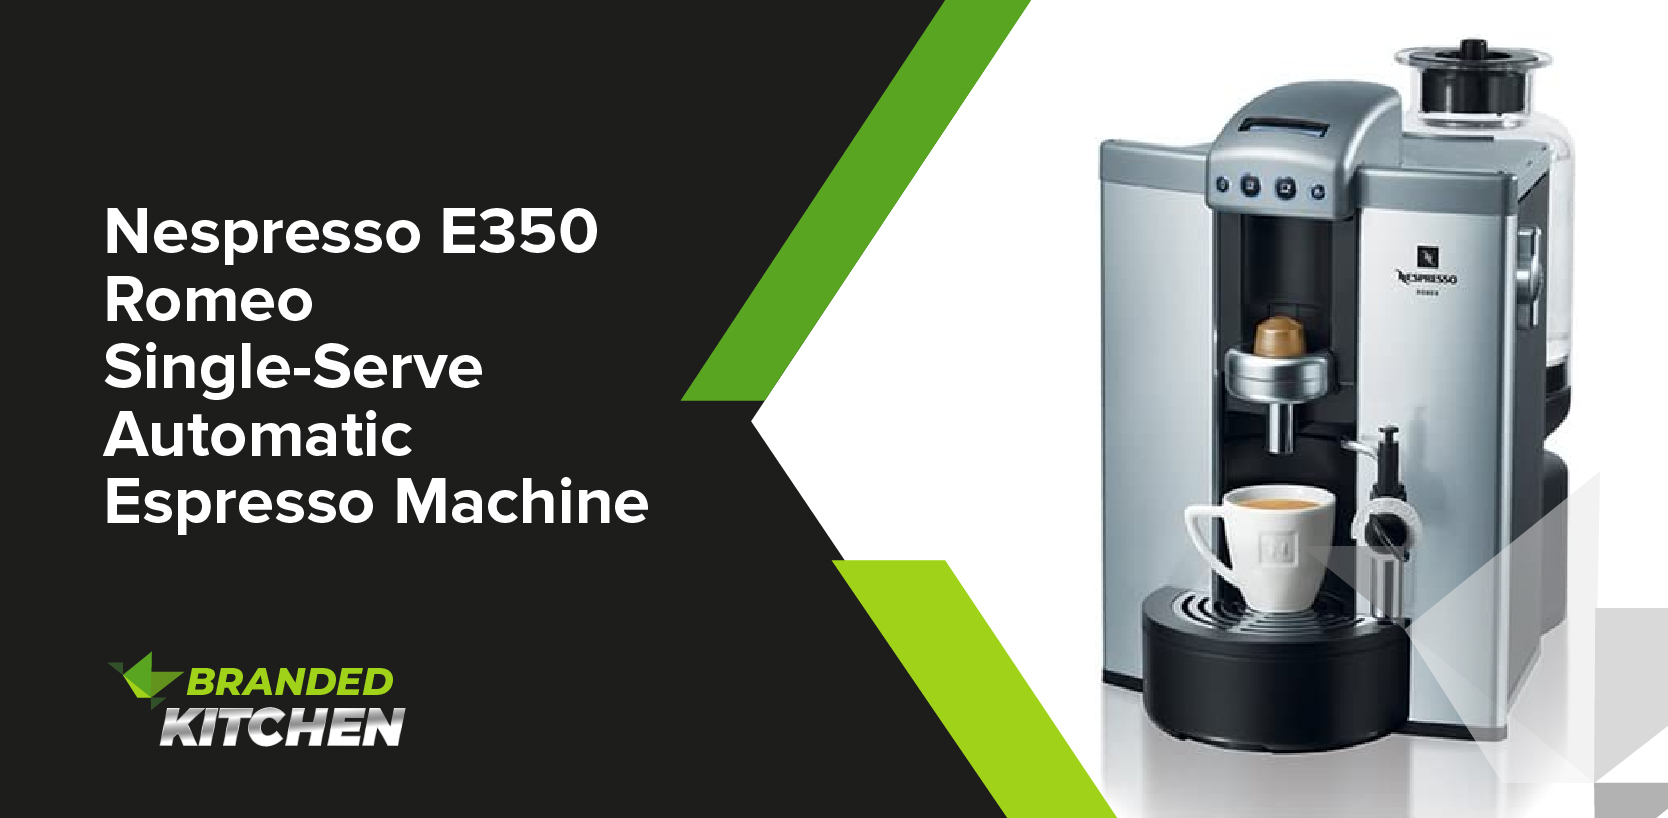 Nespresso E350 Romeo Single-Serve Automatic Espresso Machine, Polished Aluminum